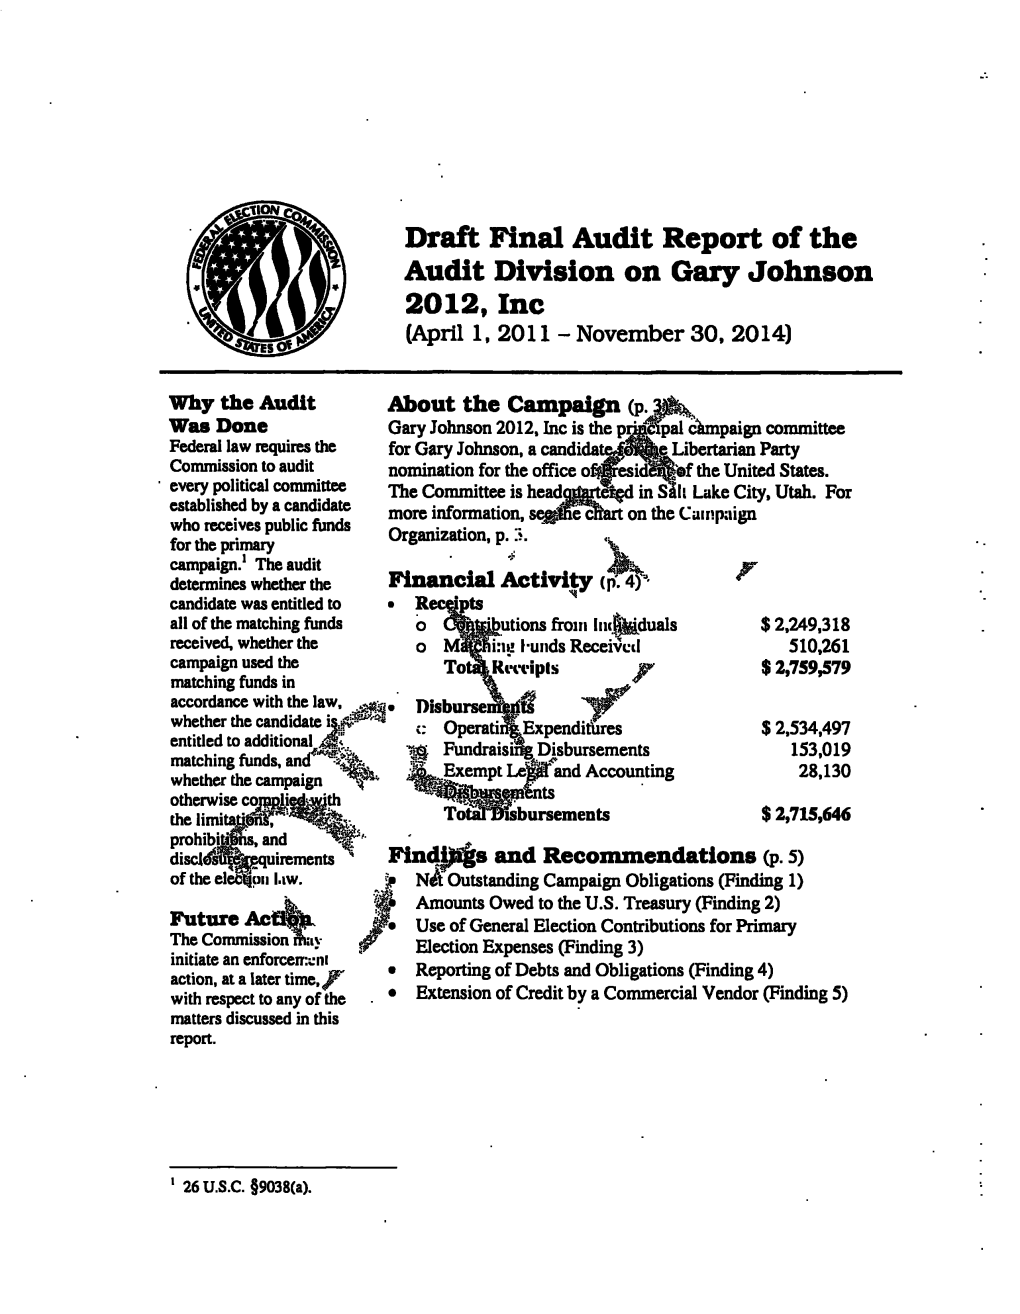 Draft Final Audit Report of the Audit Division on Gary Johnson 2012, Inc (April 1, 2011 - November 30, 2014)